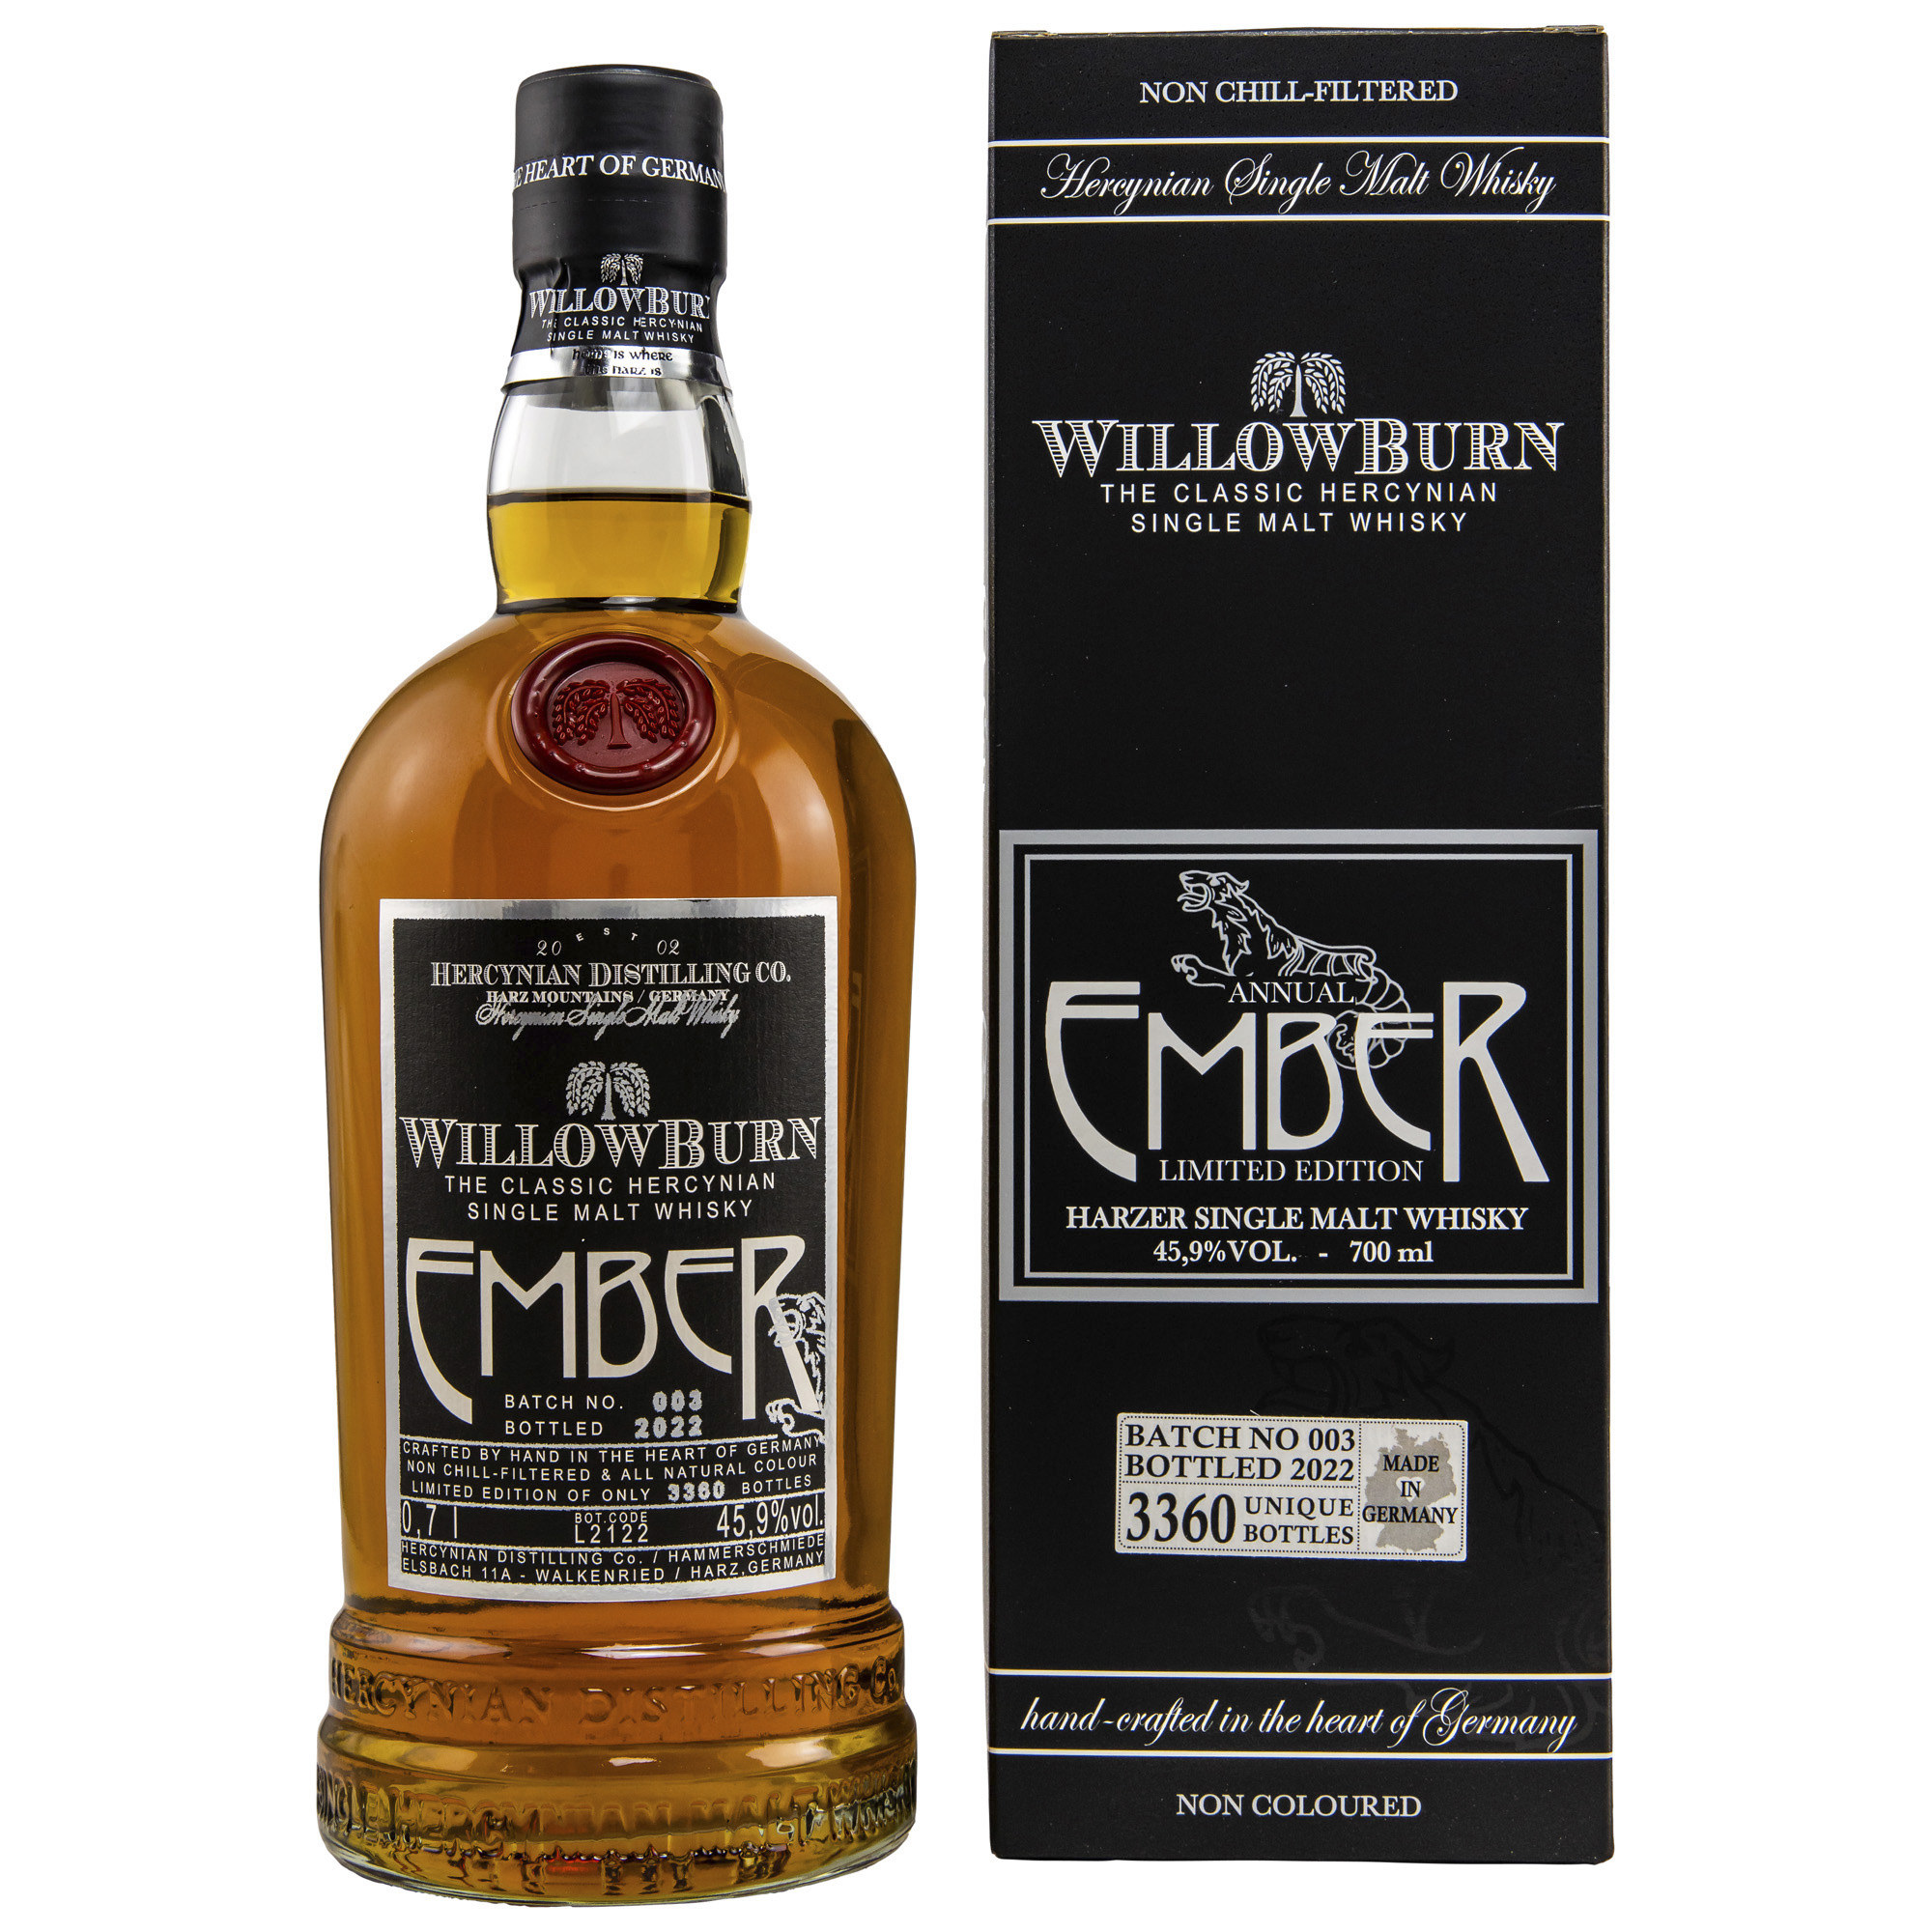 Whisky ELSBURN Willowburn - Ember Batch 003 (2022) 45,9% Vol